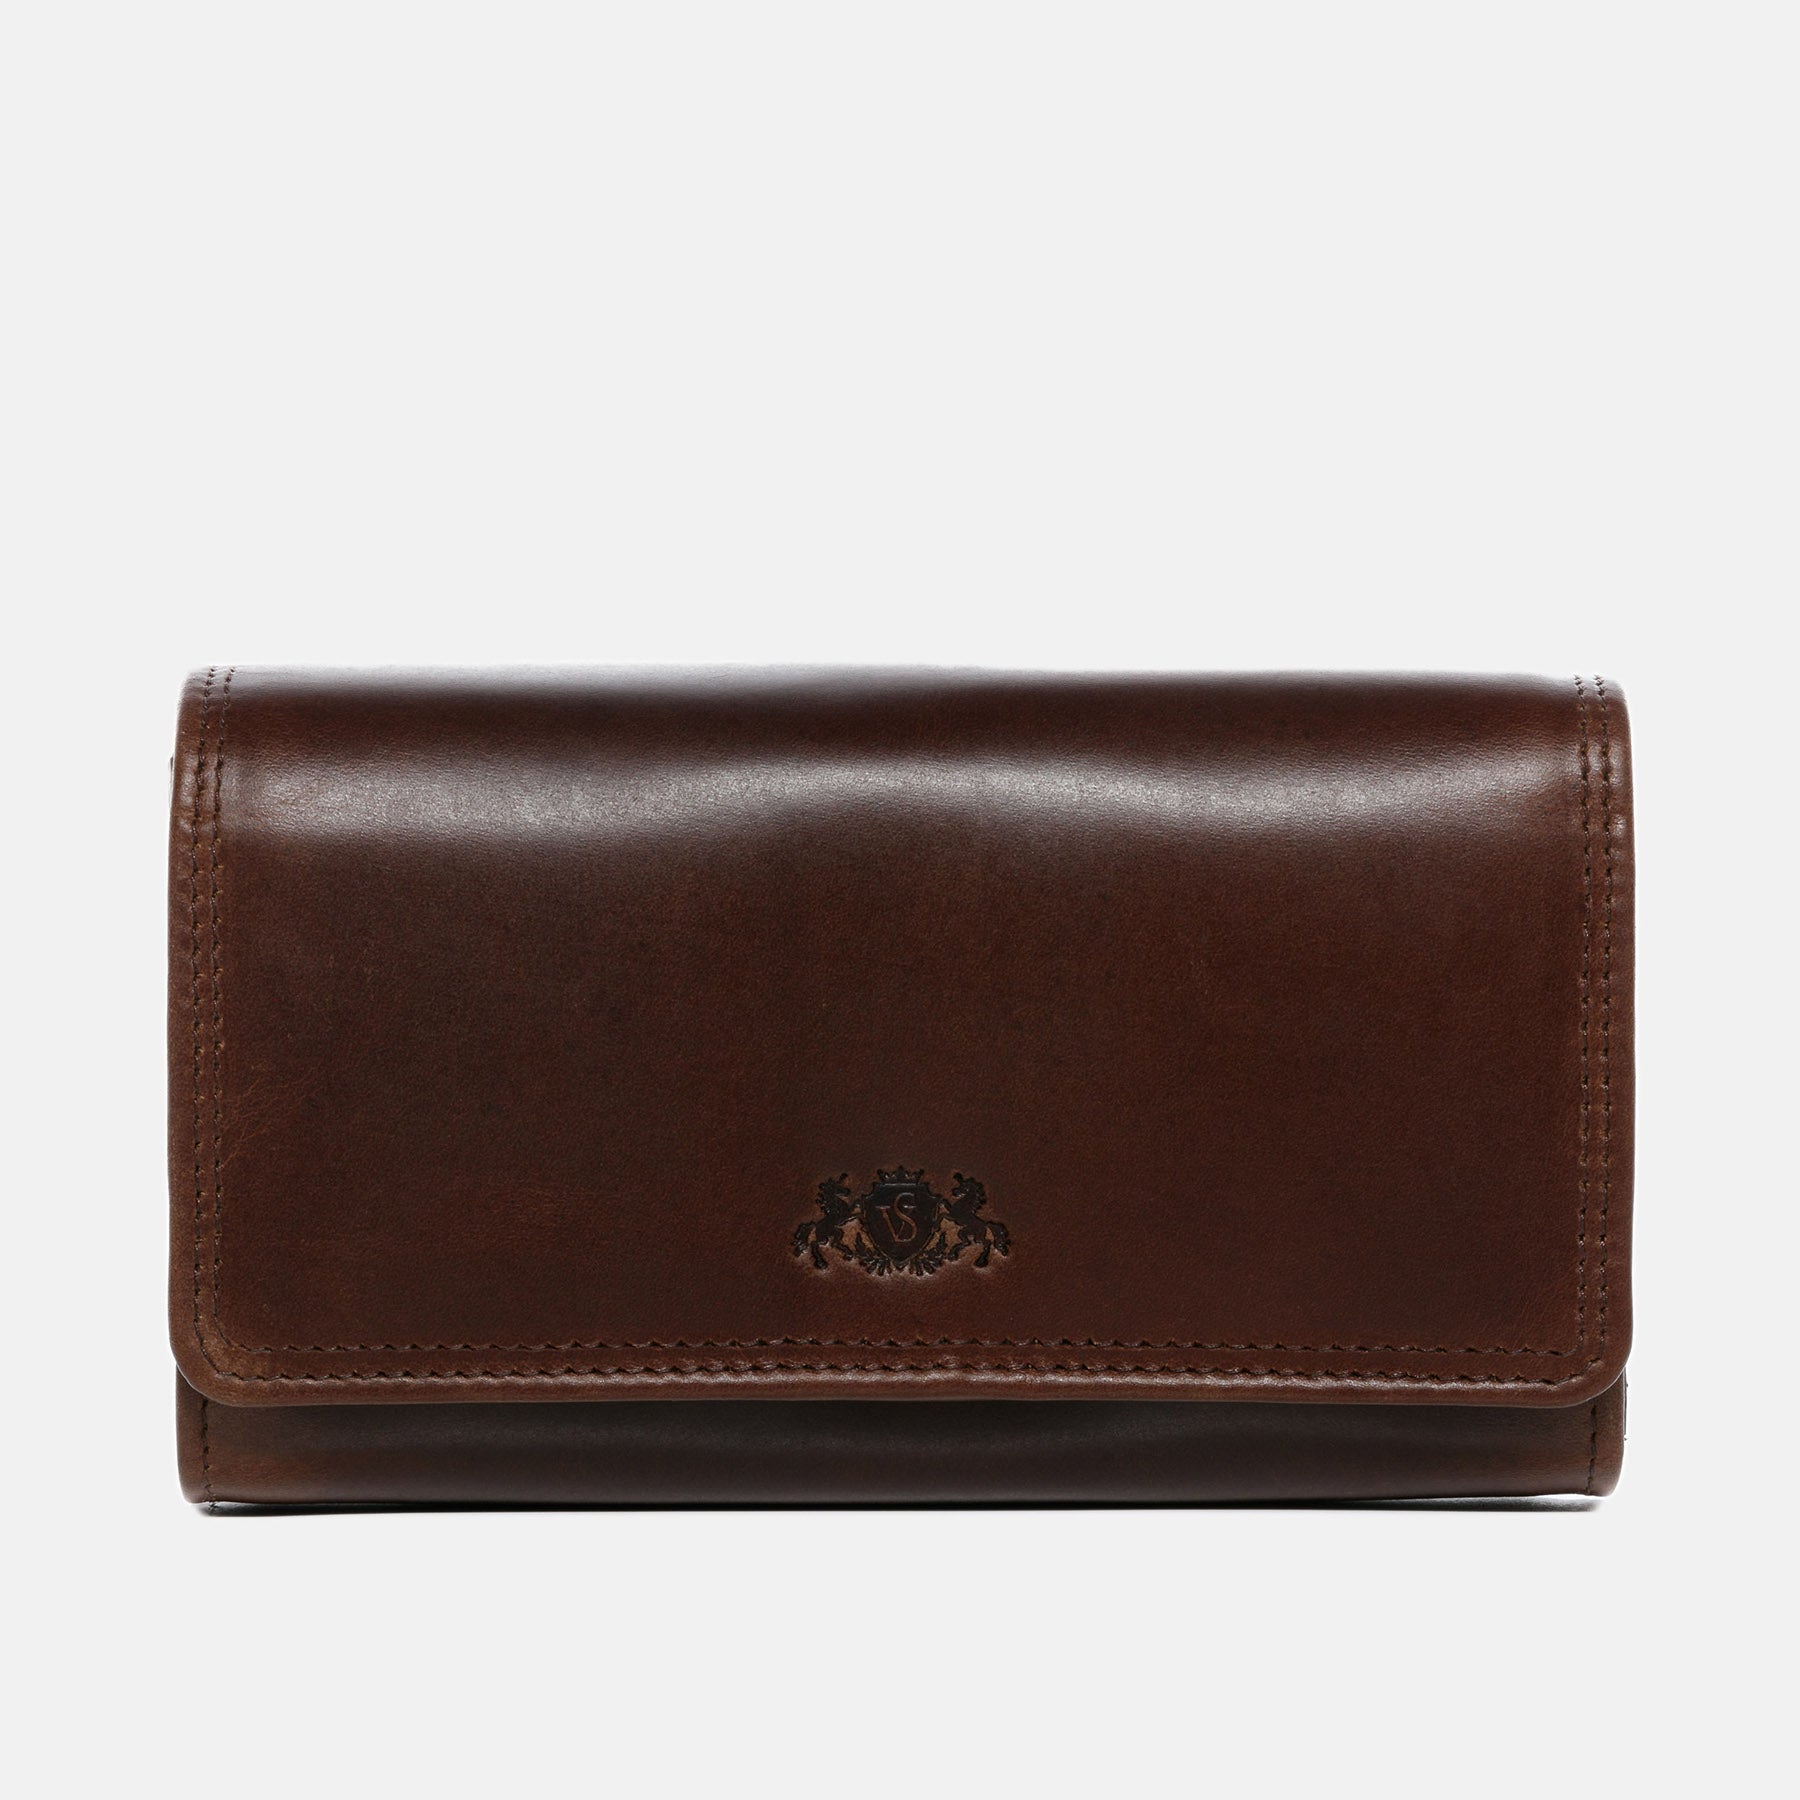 Waiter wallet ABERDEEN natural leather brown